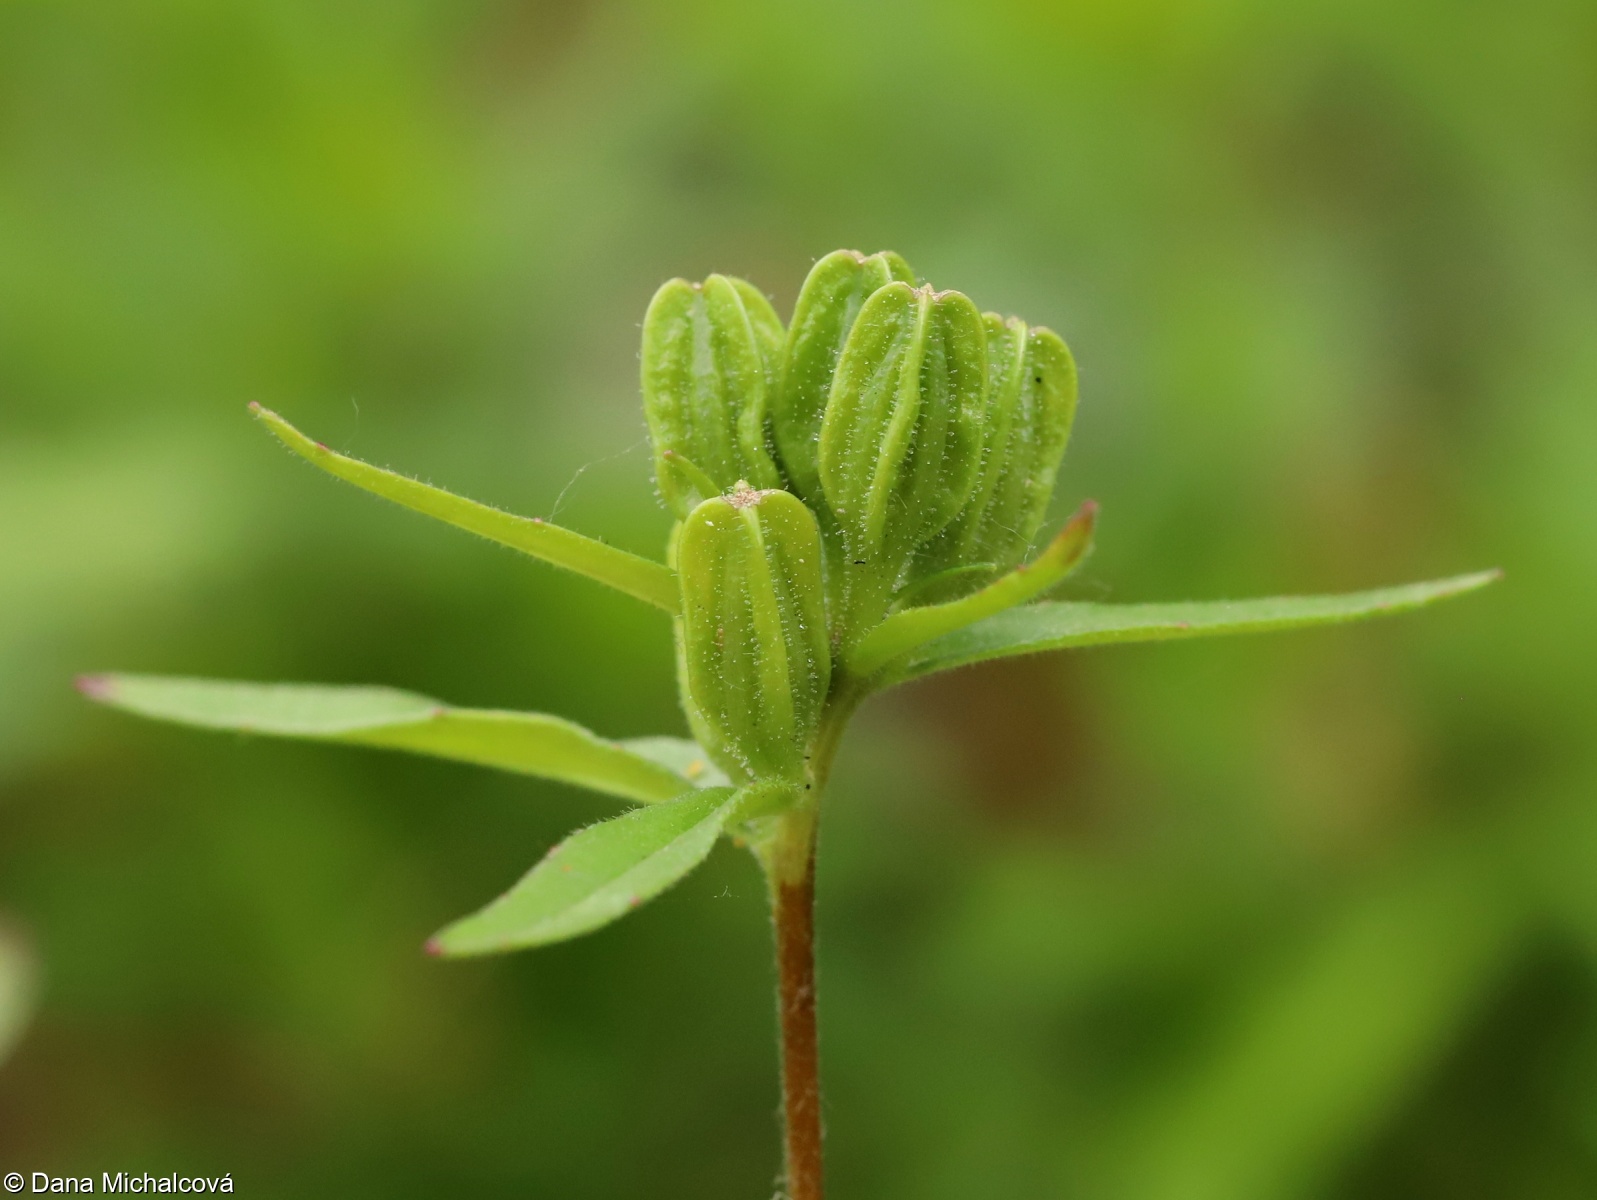 Oenothera tetragona – pupalka sivá